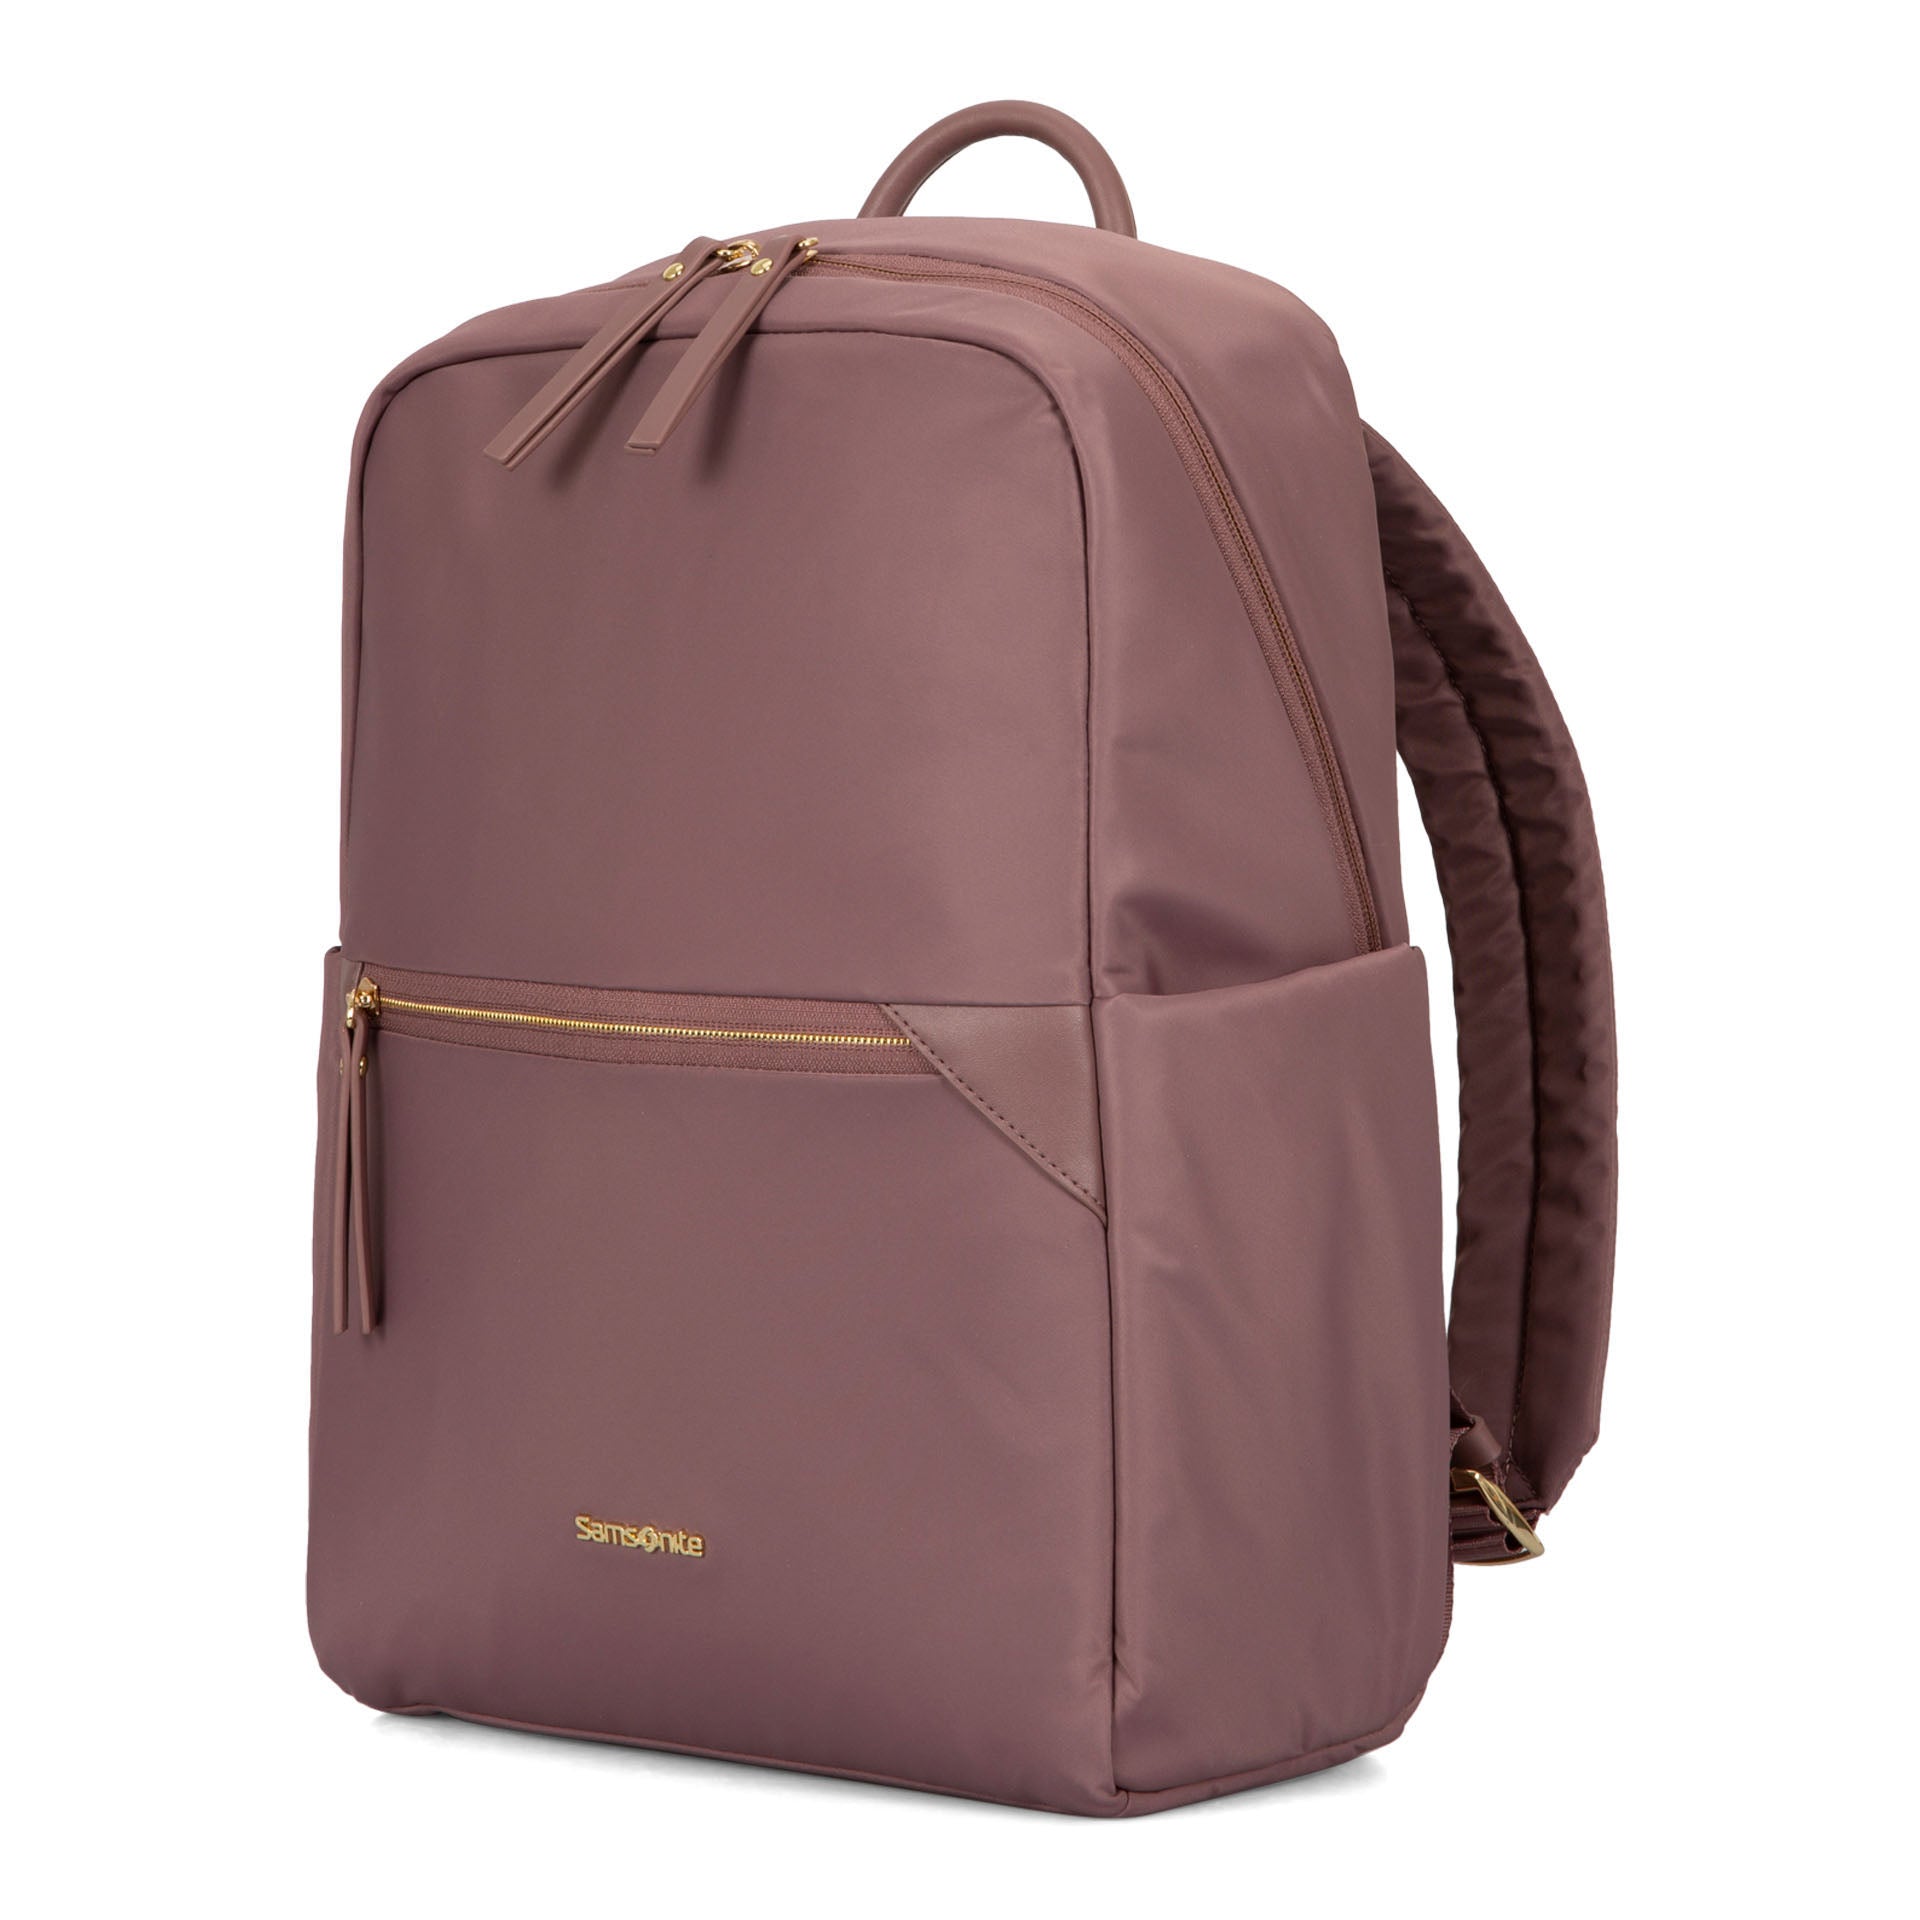 Samsonite Egypt - The Bags No.1 in Egypt Travel bag Backpack Cross bags  Laptop bags Bags